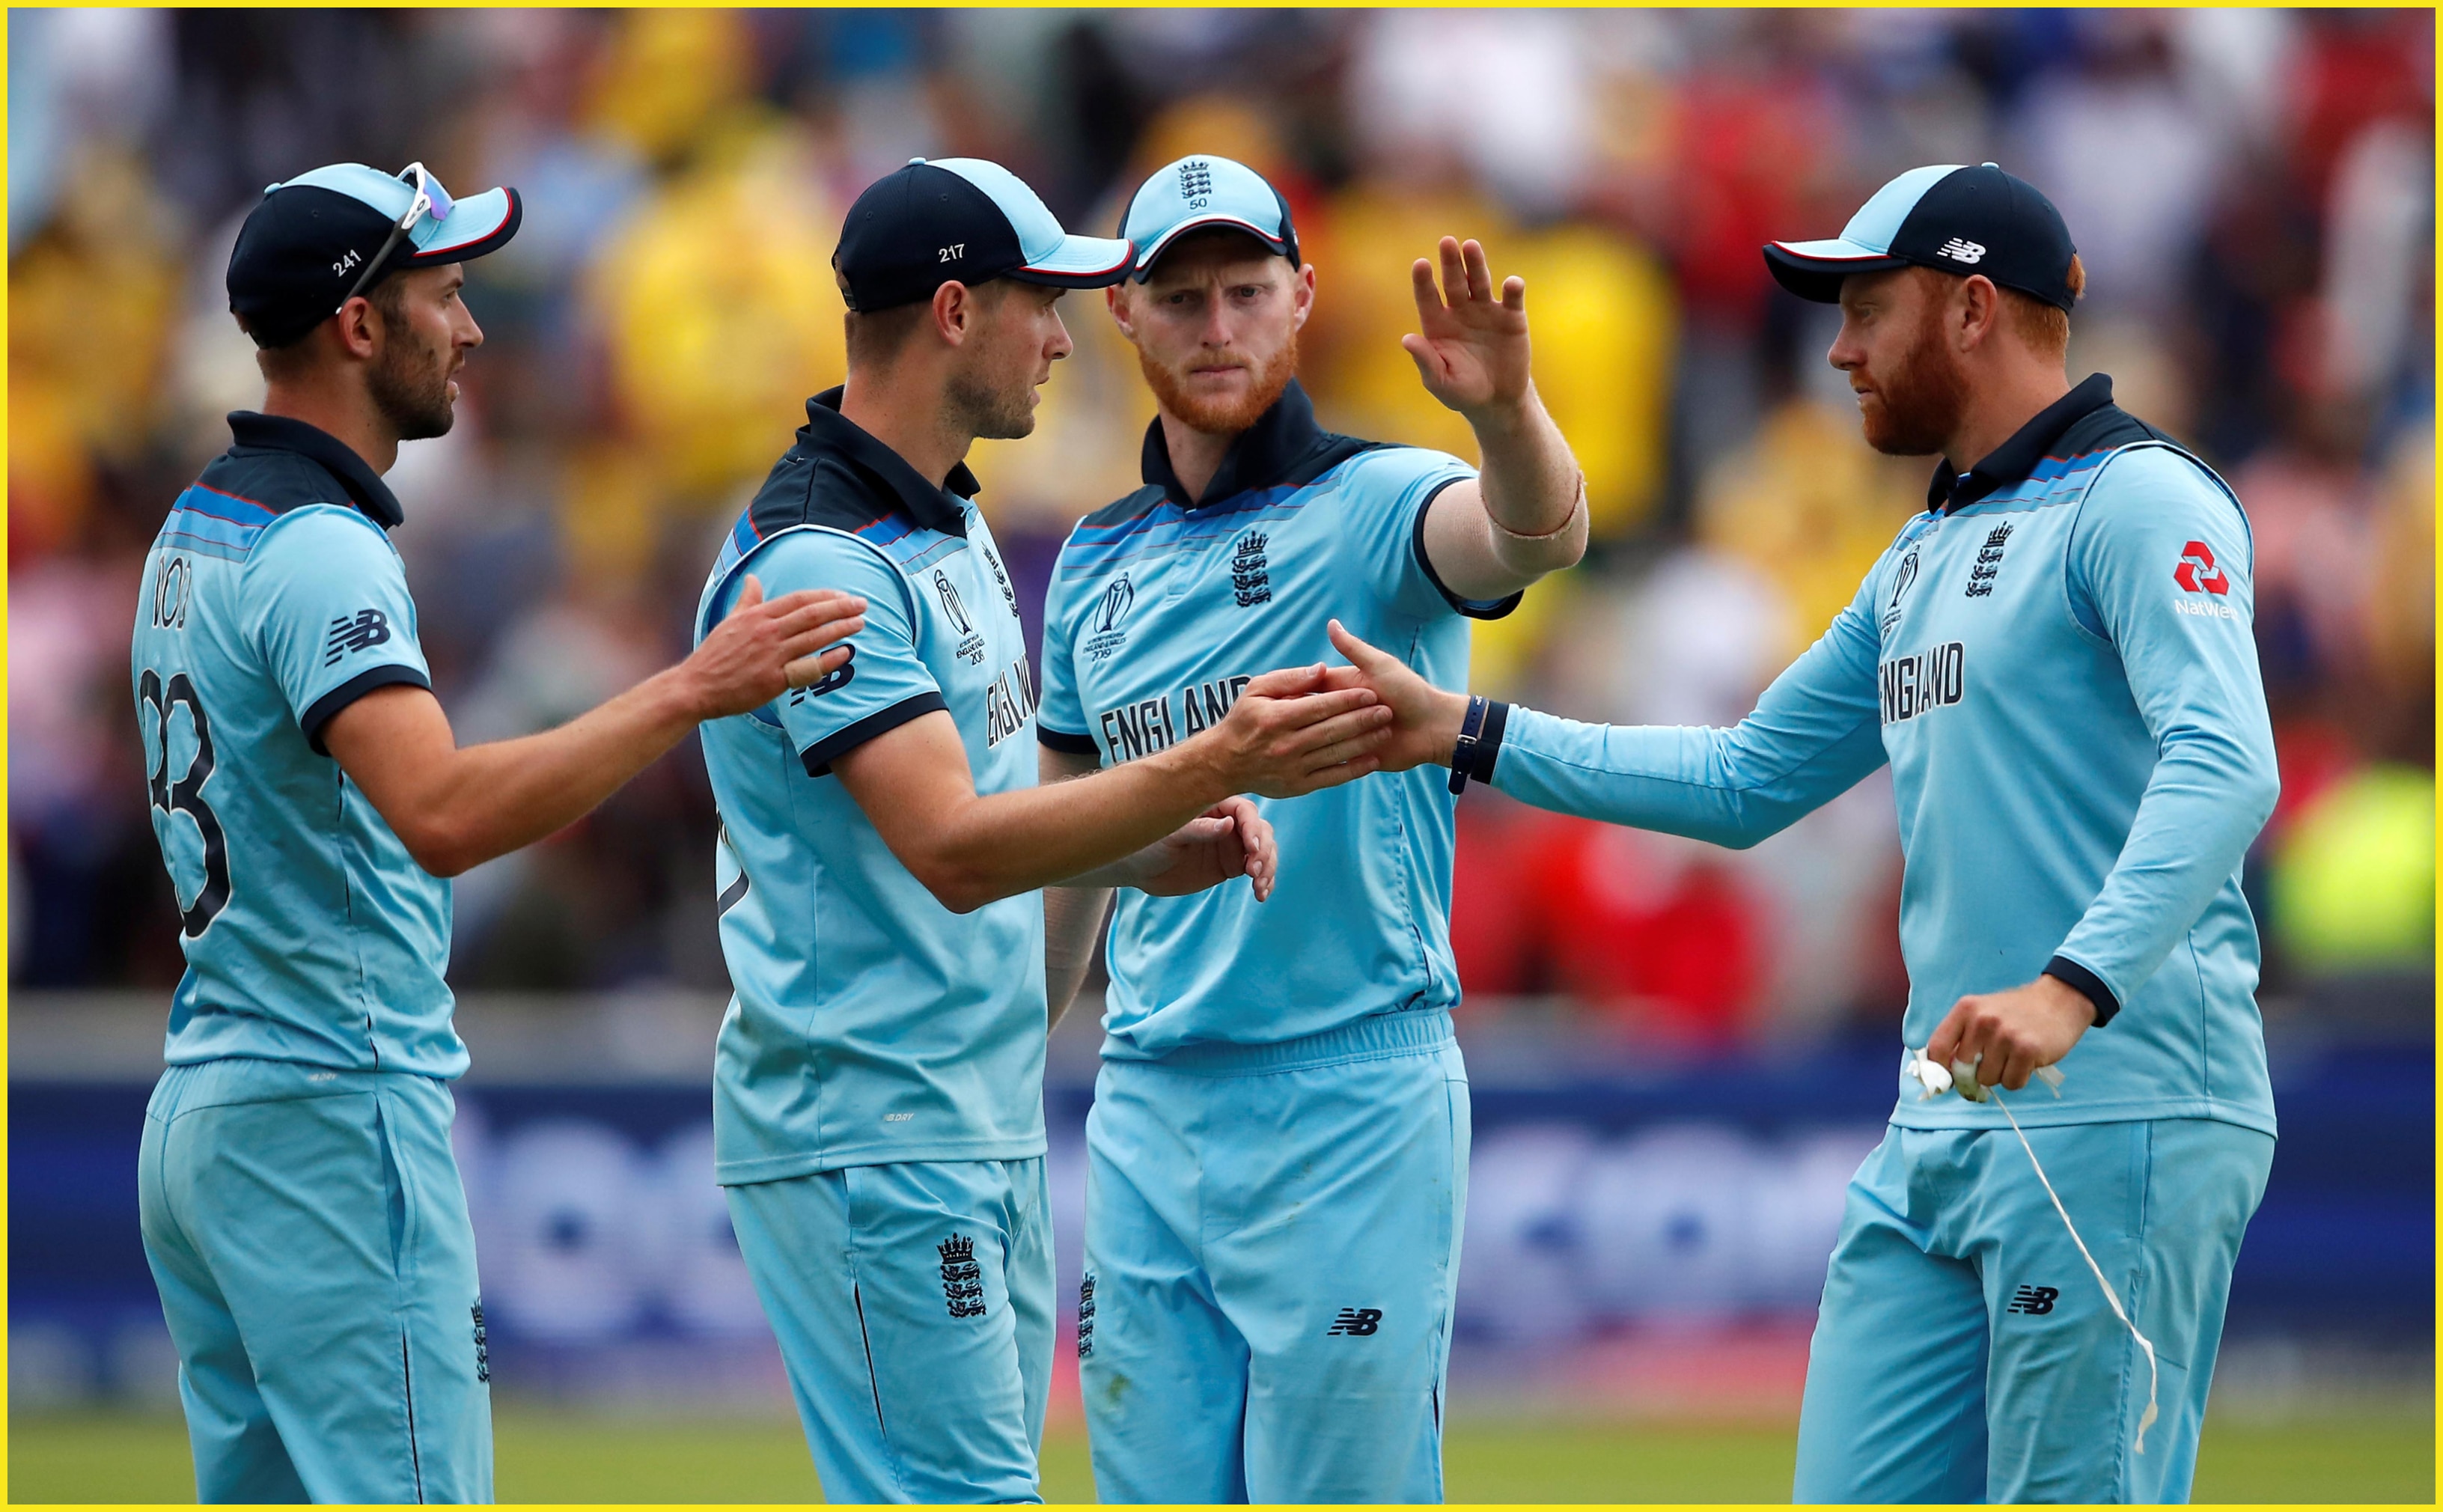 England vs Australia Live Cricket Score, World Cup 2019 In Pictures - ENG vs AUS Live ...3264 x 2020